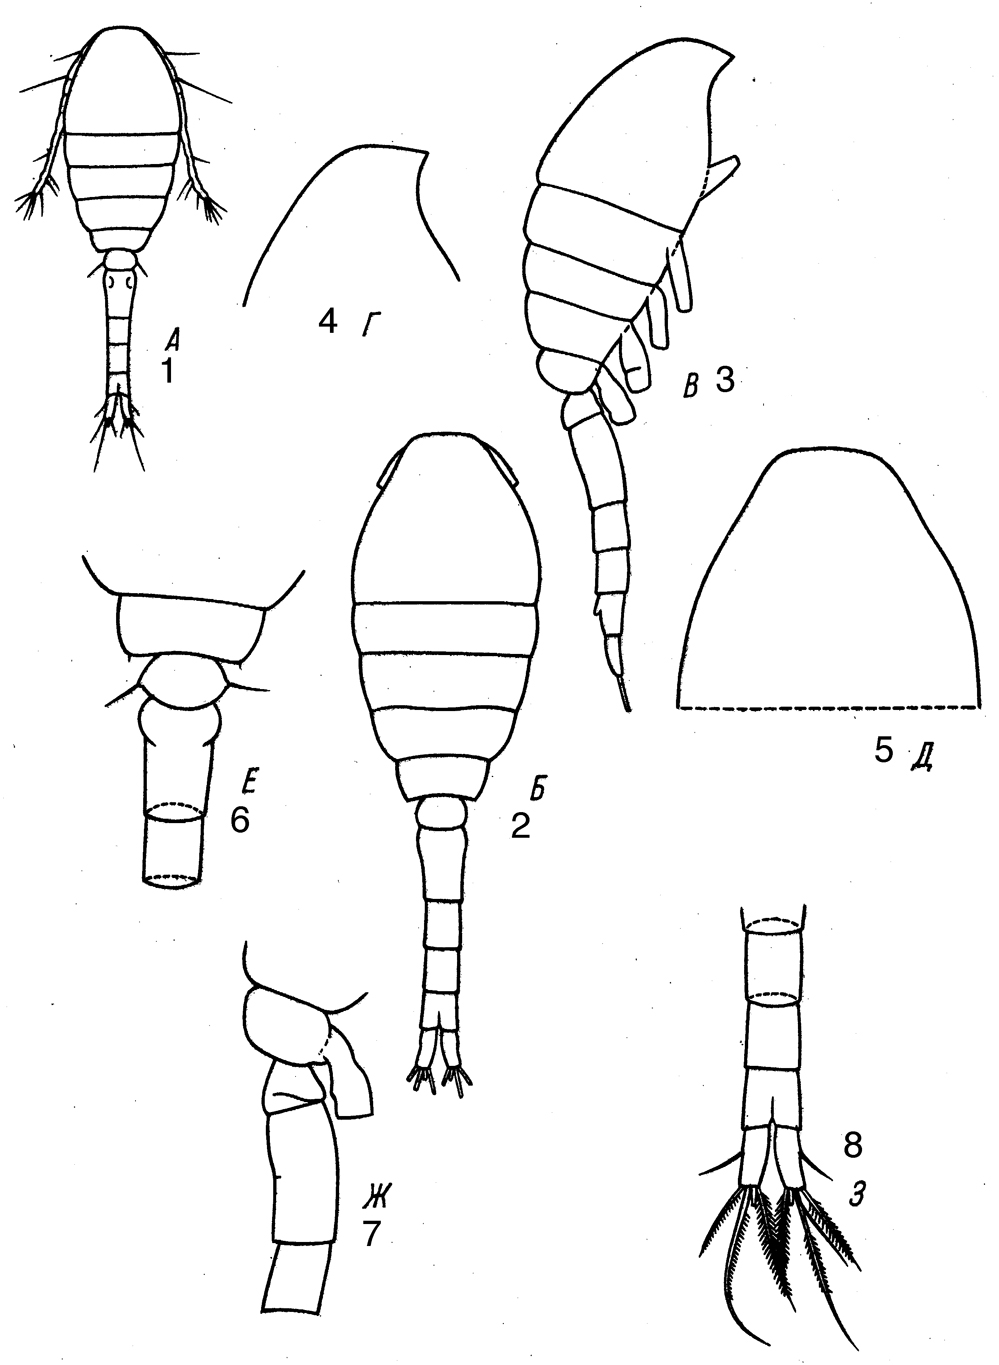 Species Dioithona rigida - Plate 10 of morphological figures